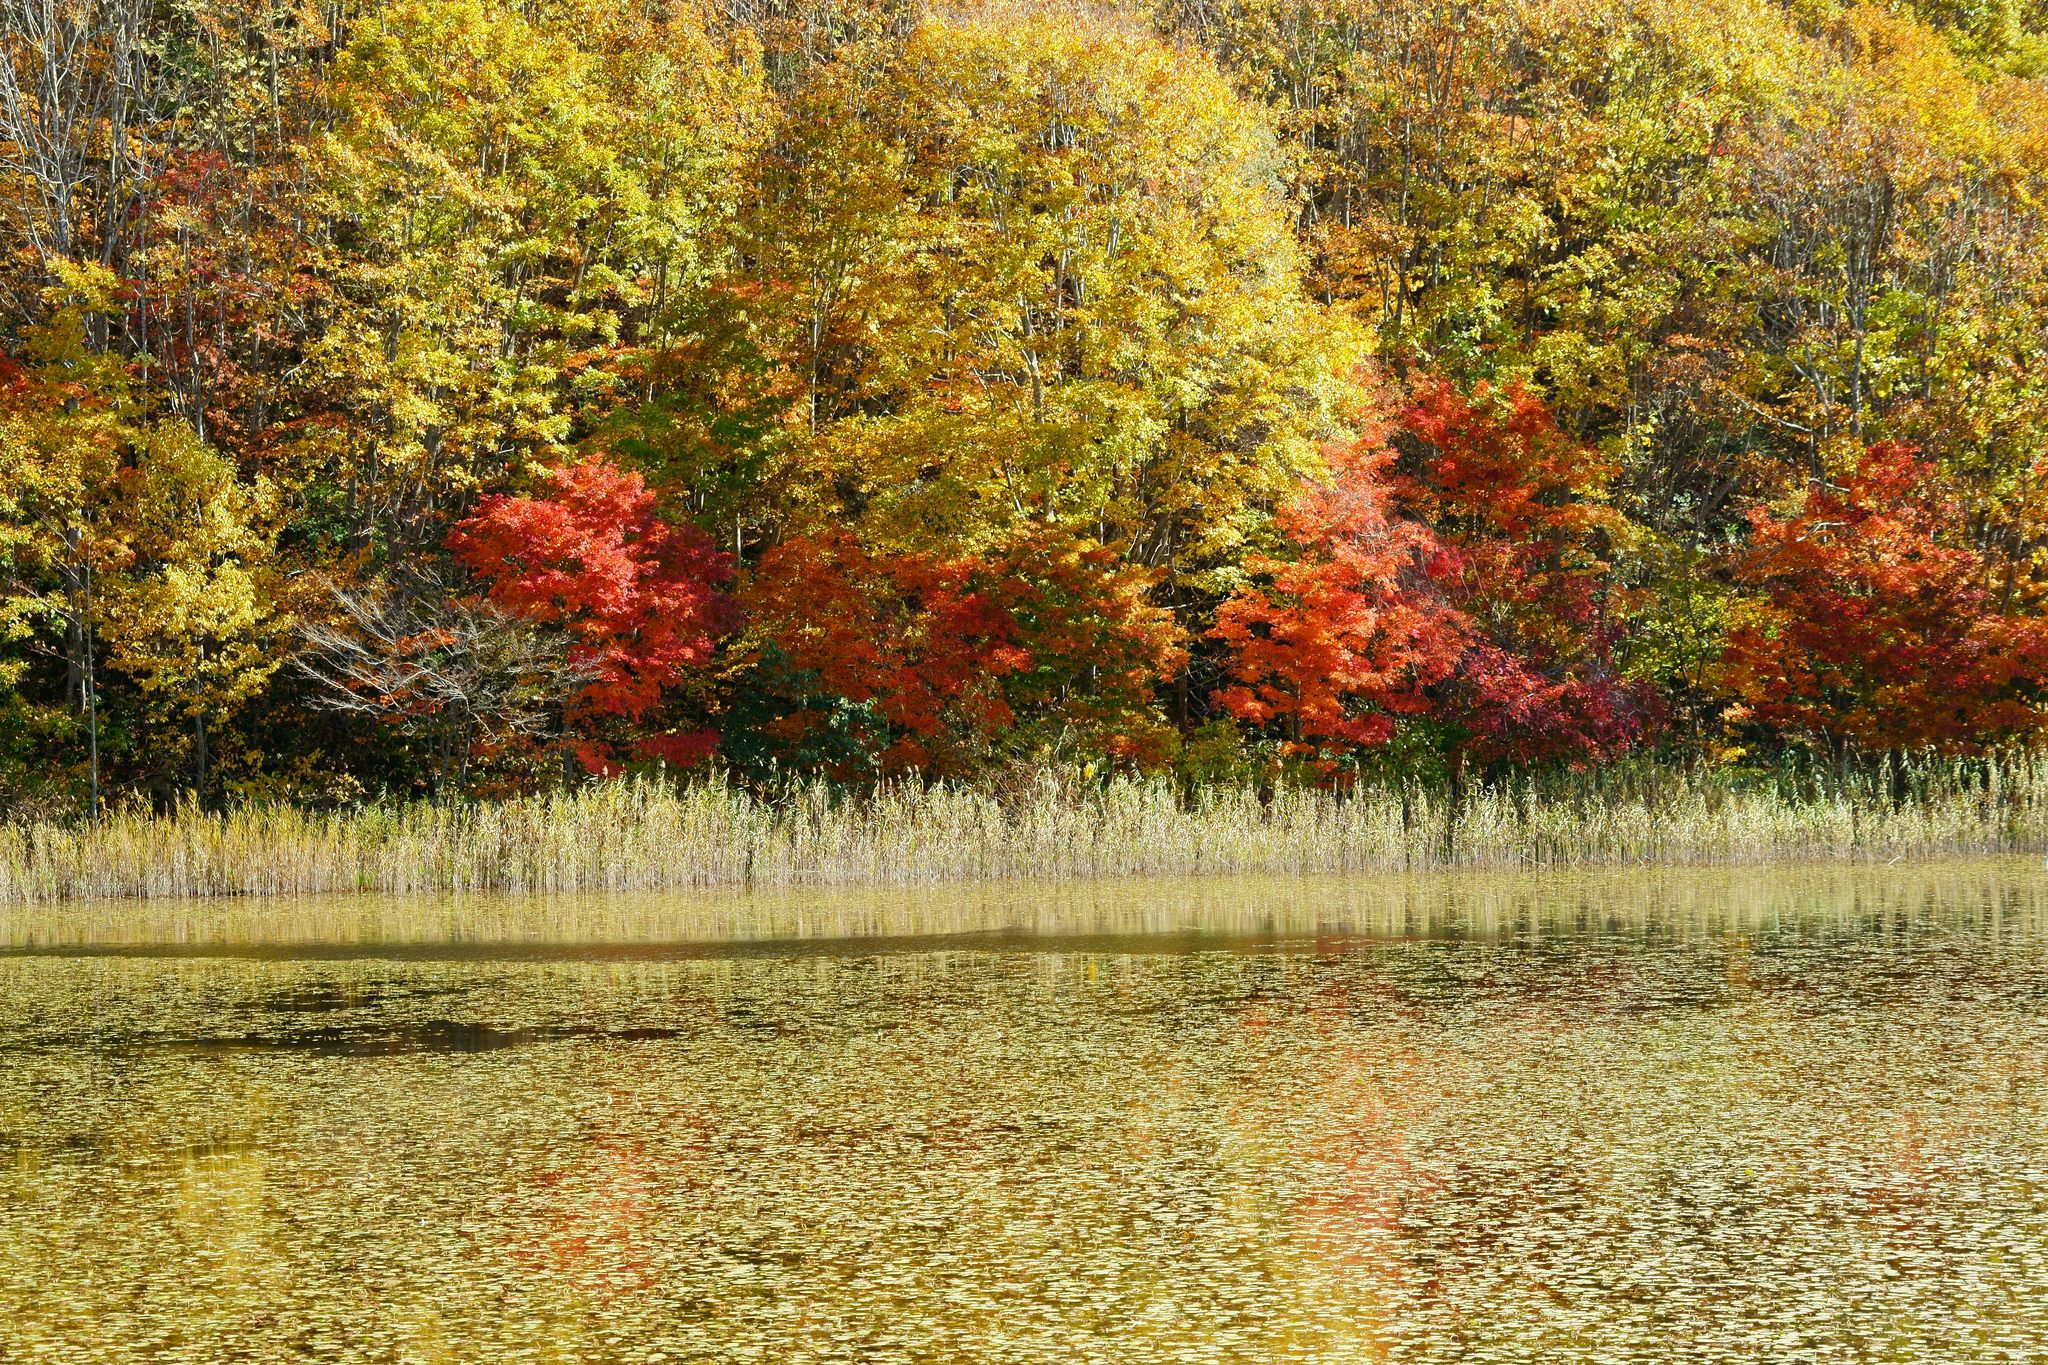 Magarisawanuma Pond | Autumn scenes